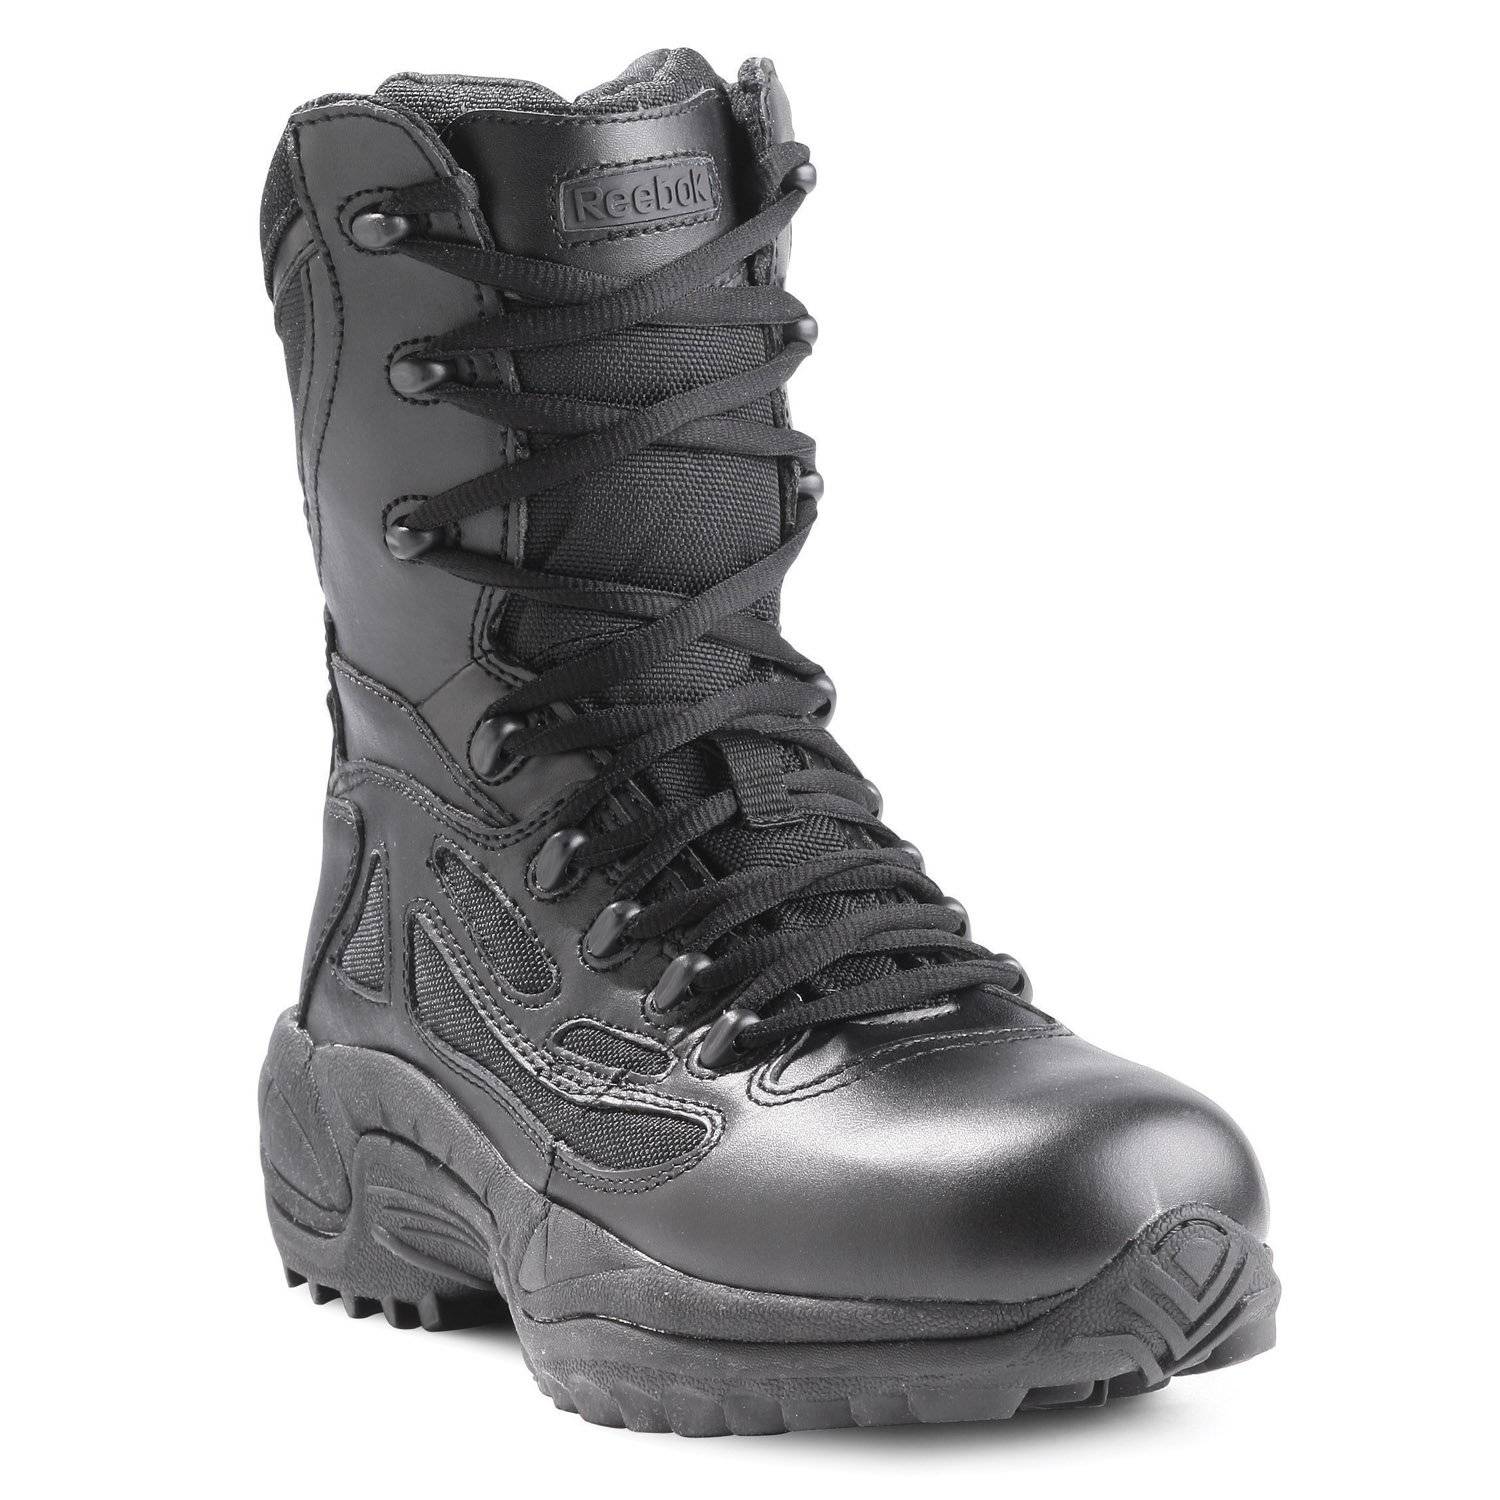 reebok boots for women